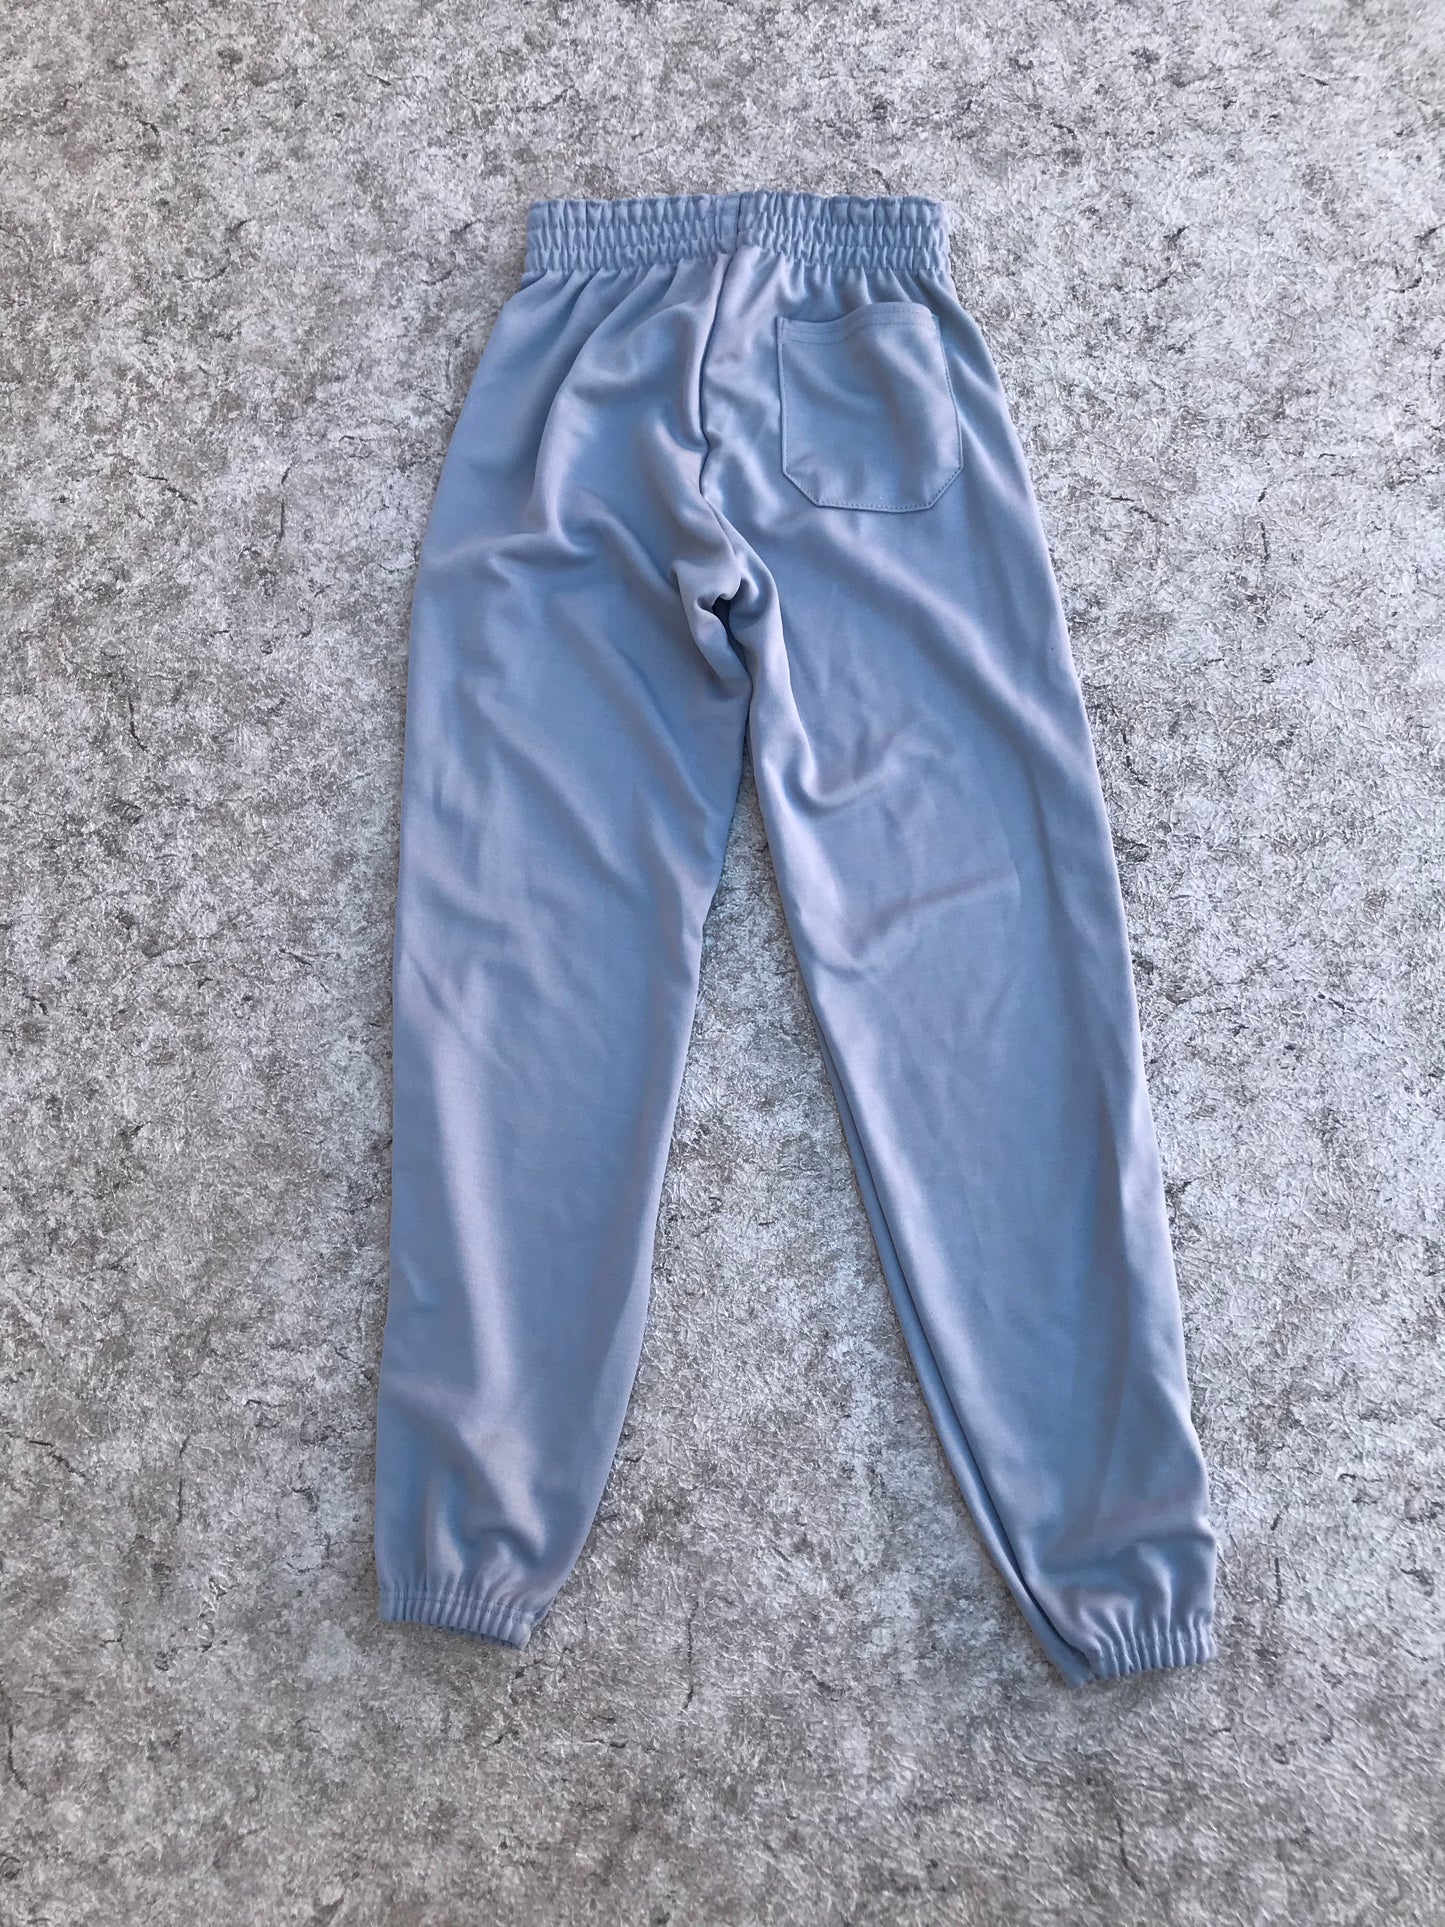 Baseball Pants Child Size Y X Large 12-14 Grey  NEW